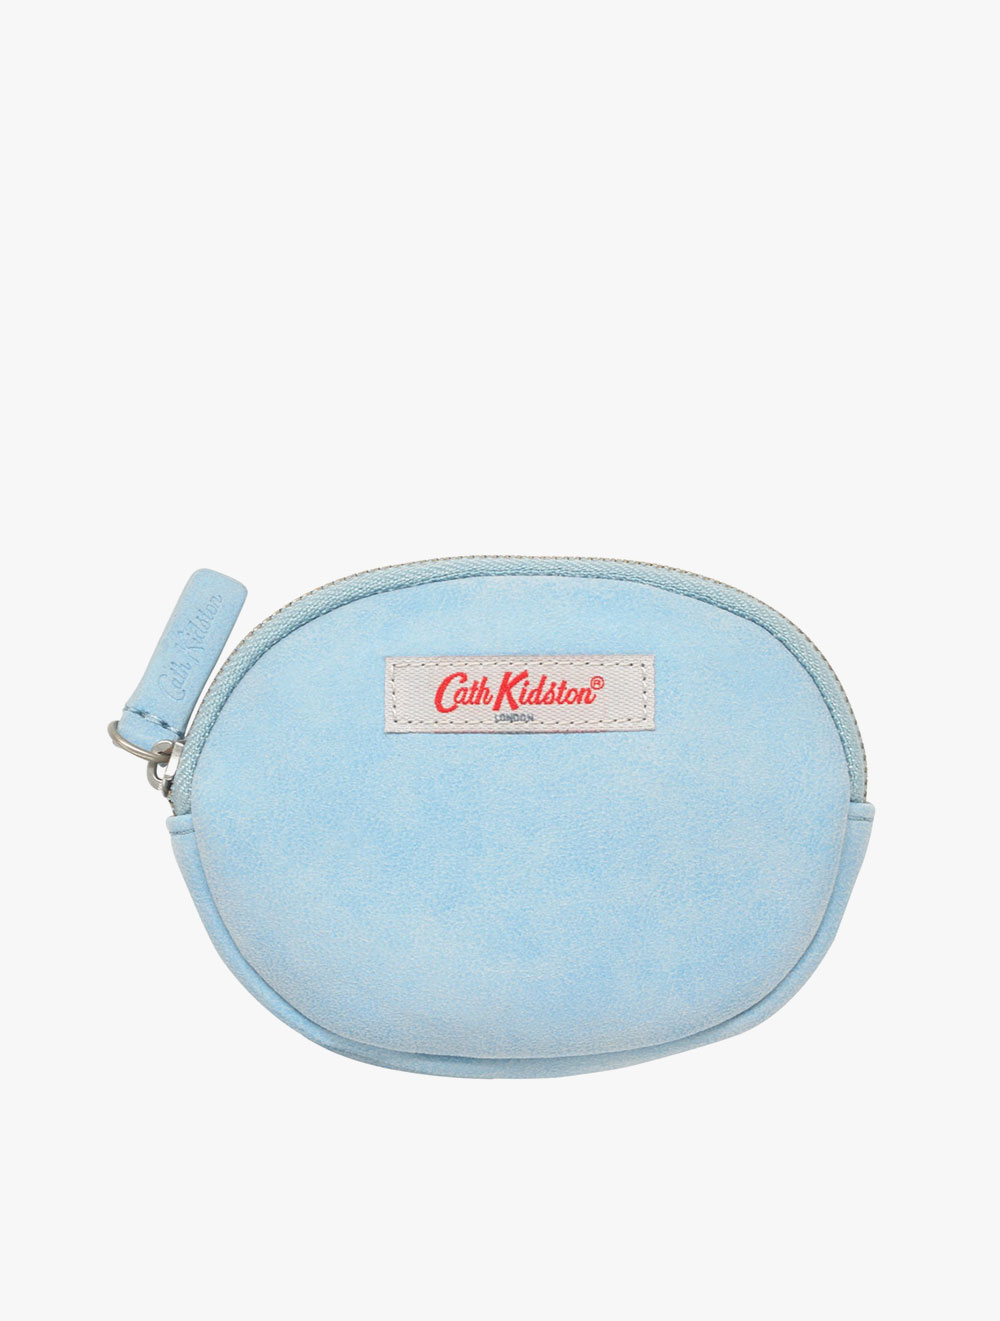 cath kidston oval coin purse